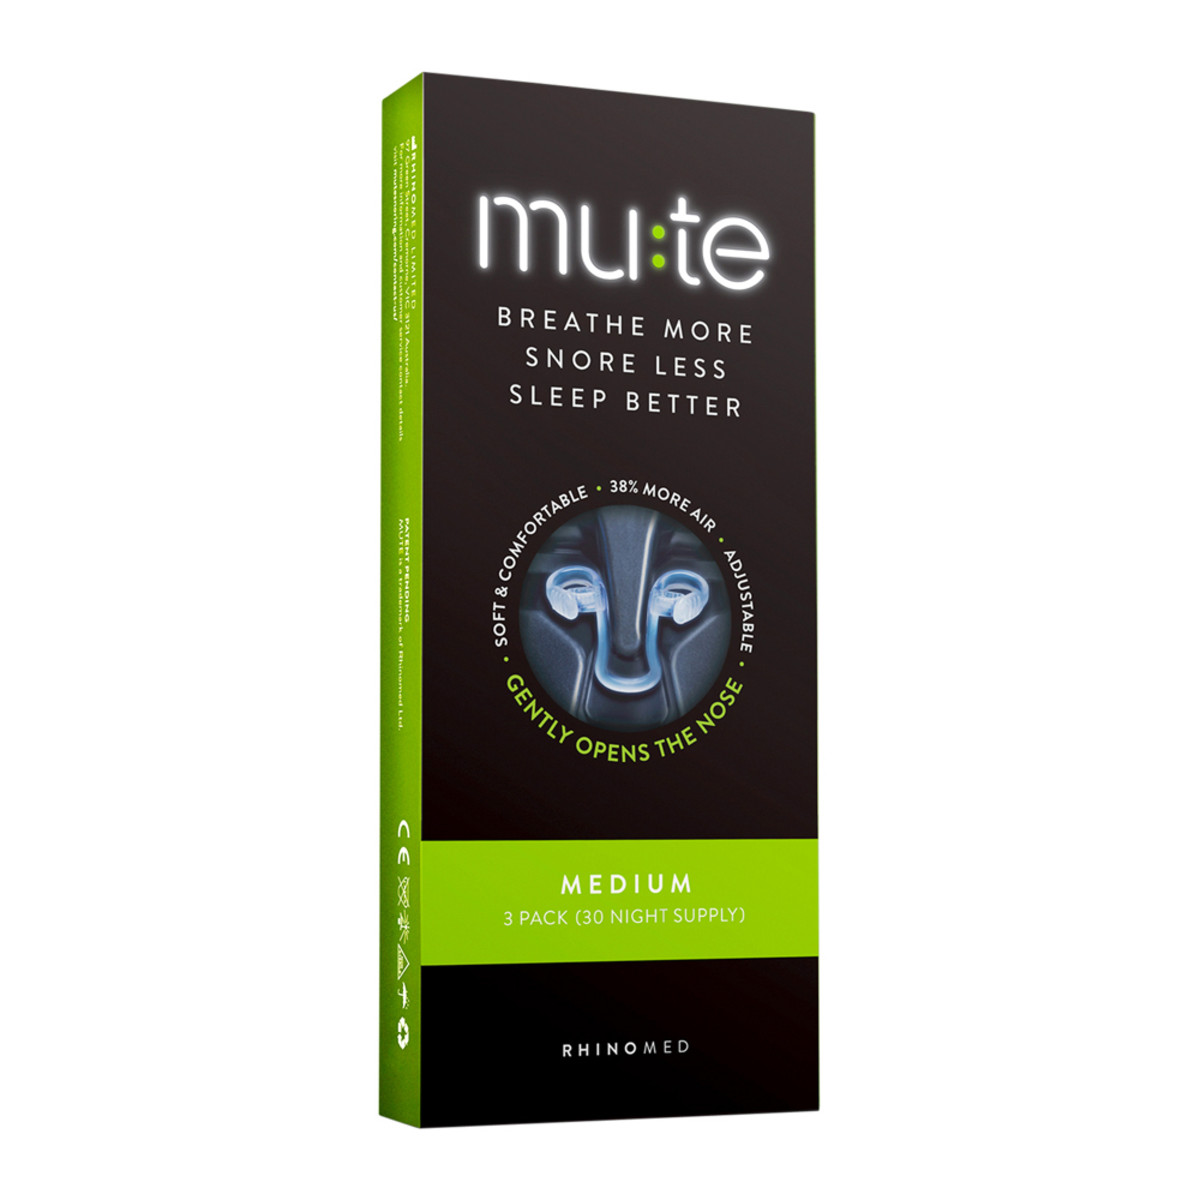 Rhinomed Mute (Breathe More, Snore Less, Sleep Better) Medium x 3 Pack (30 night supply)